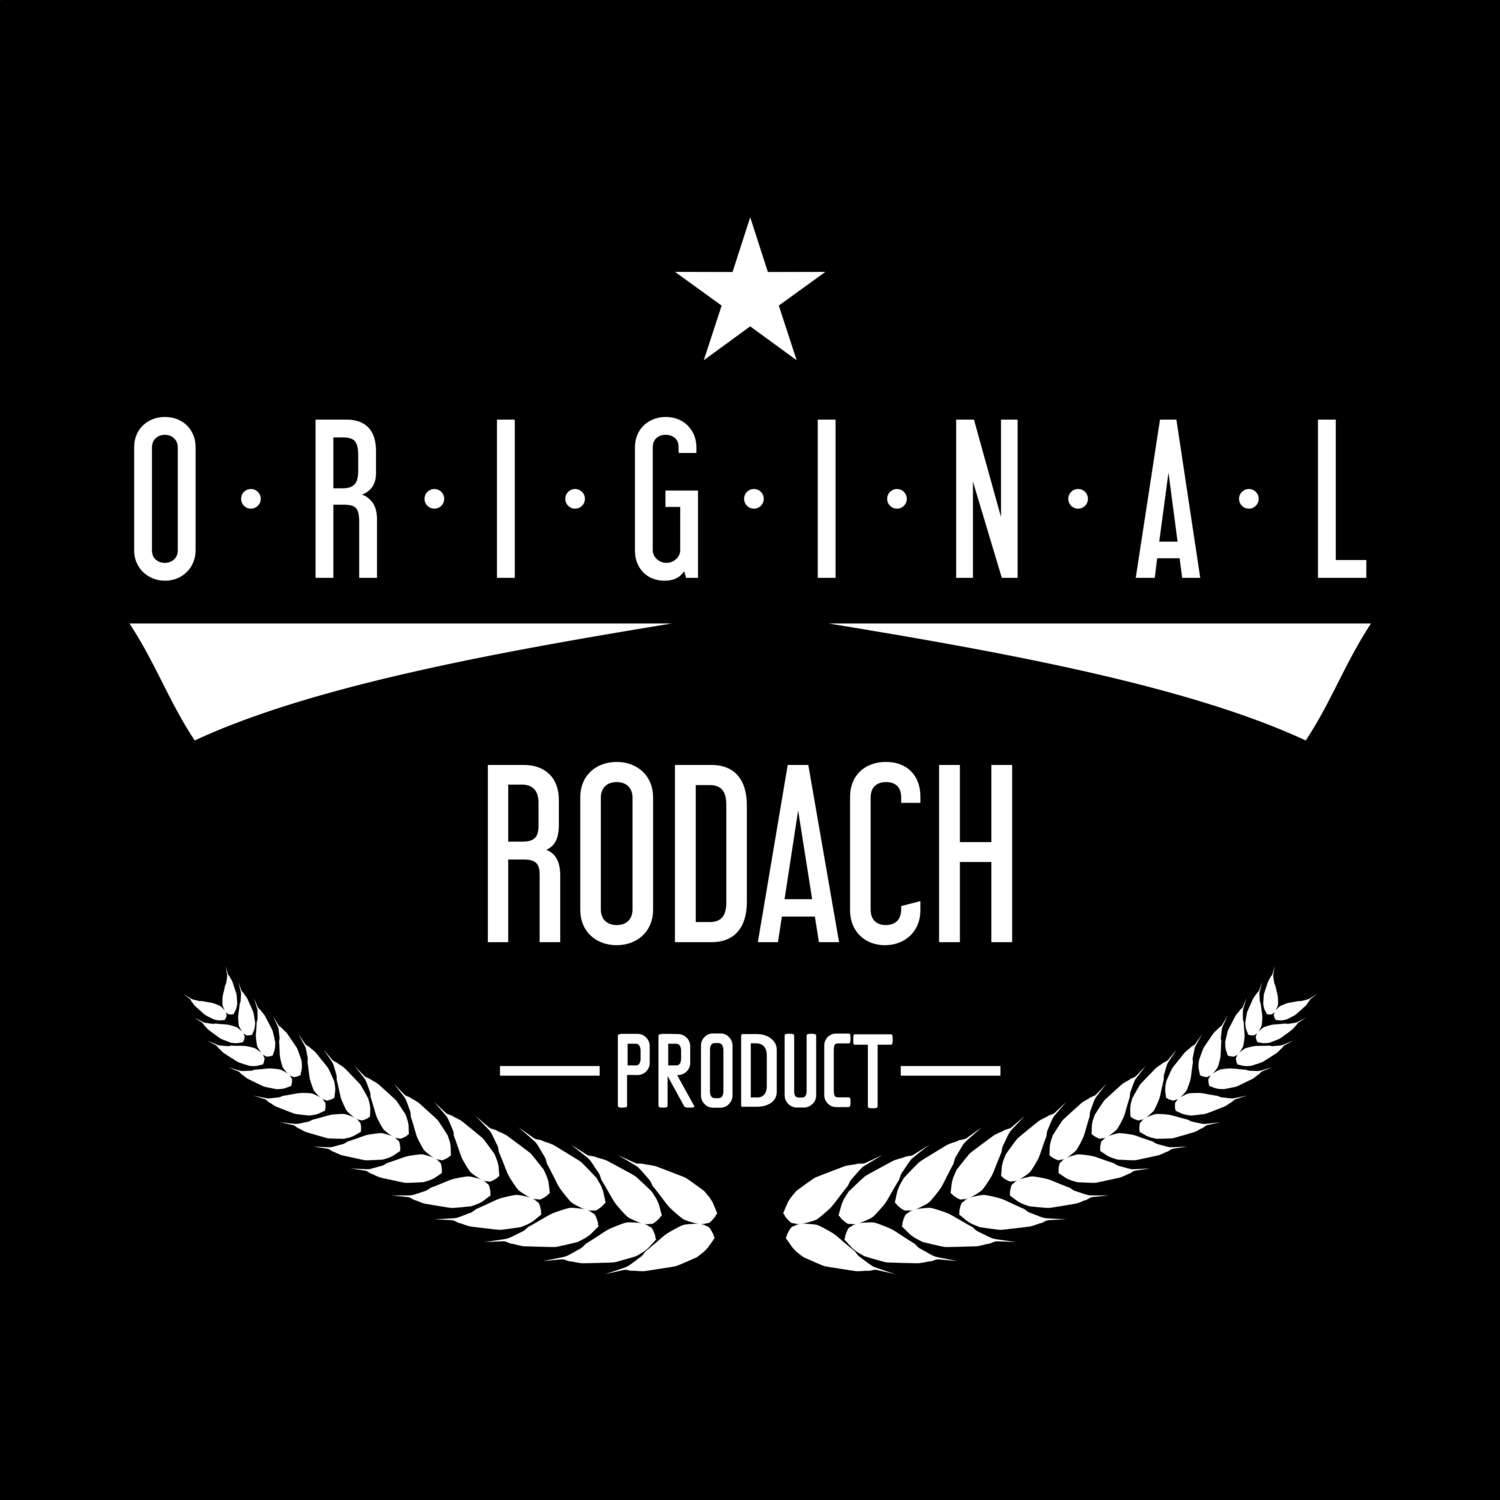 Rodach T-Shirt »Original Product«